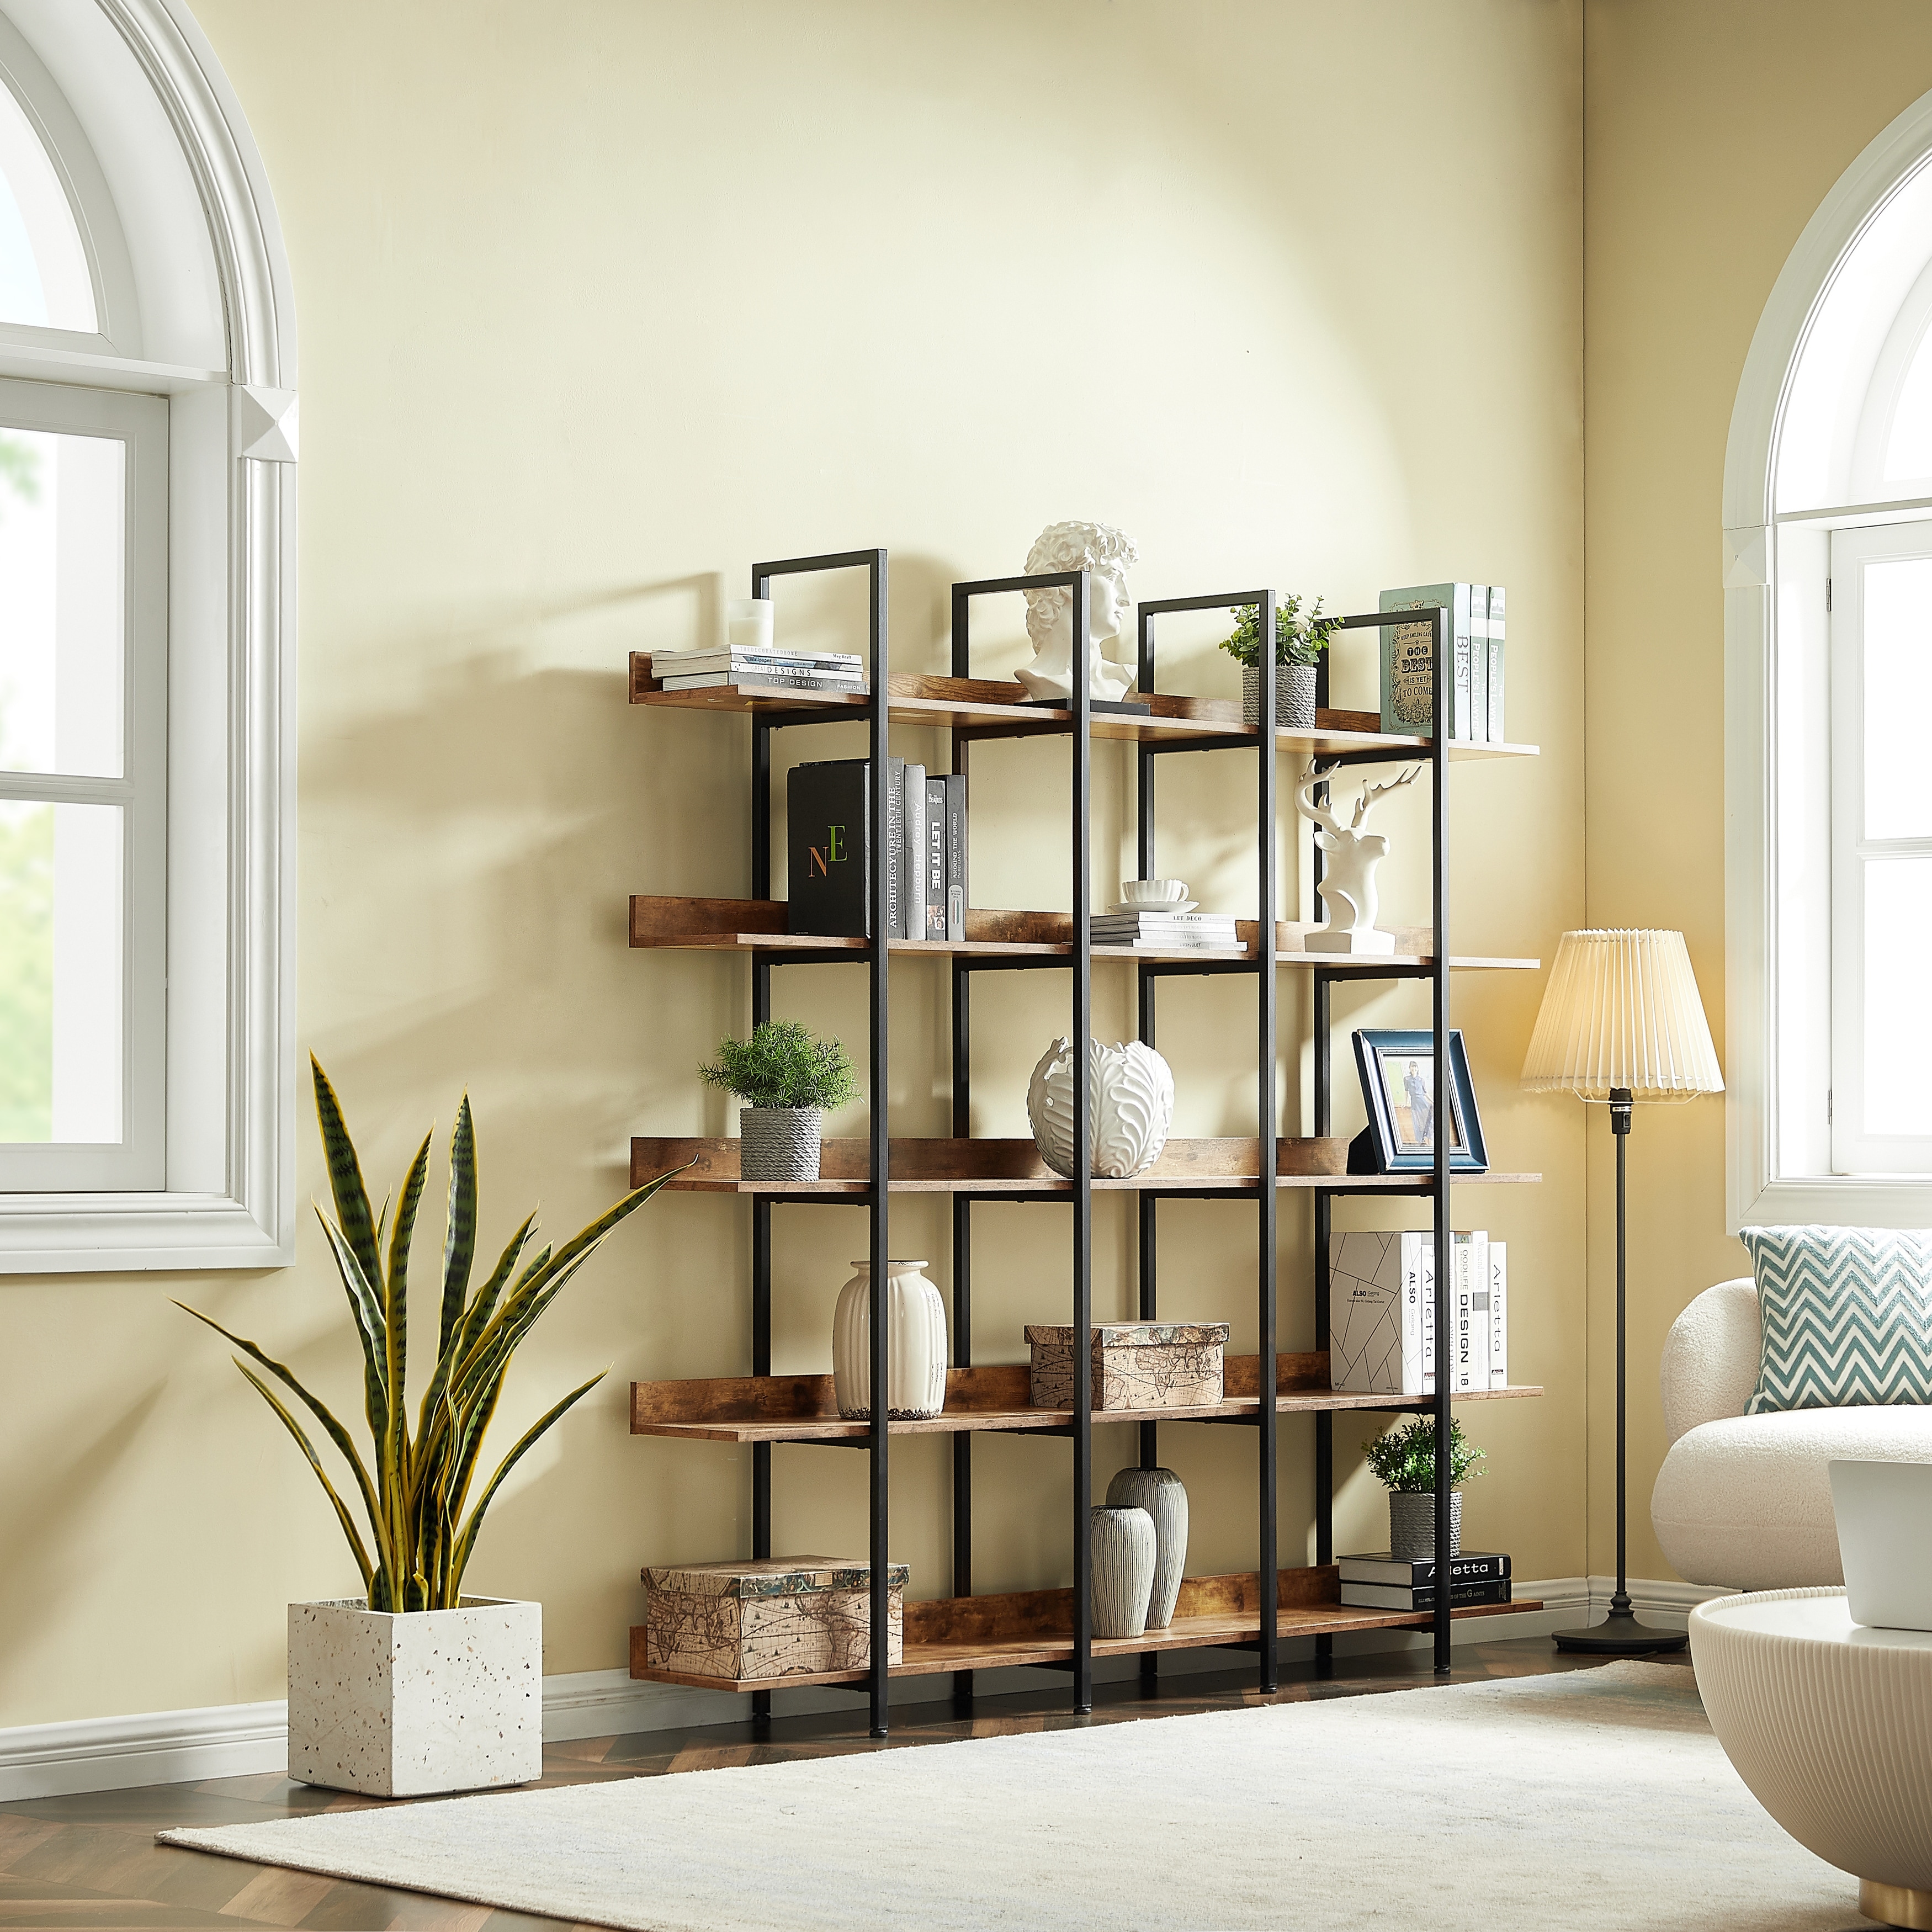 OTK 5 Tier Bookshelf, Tall Bookcase, Office Shelf Storage